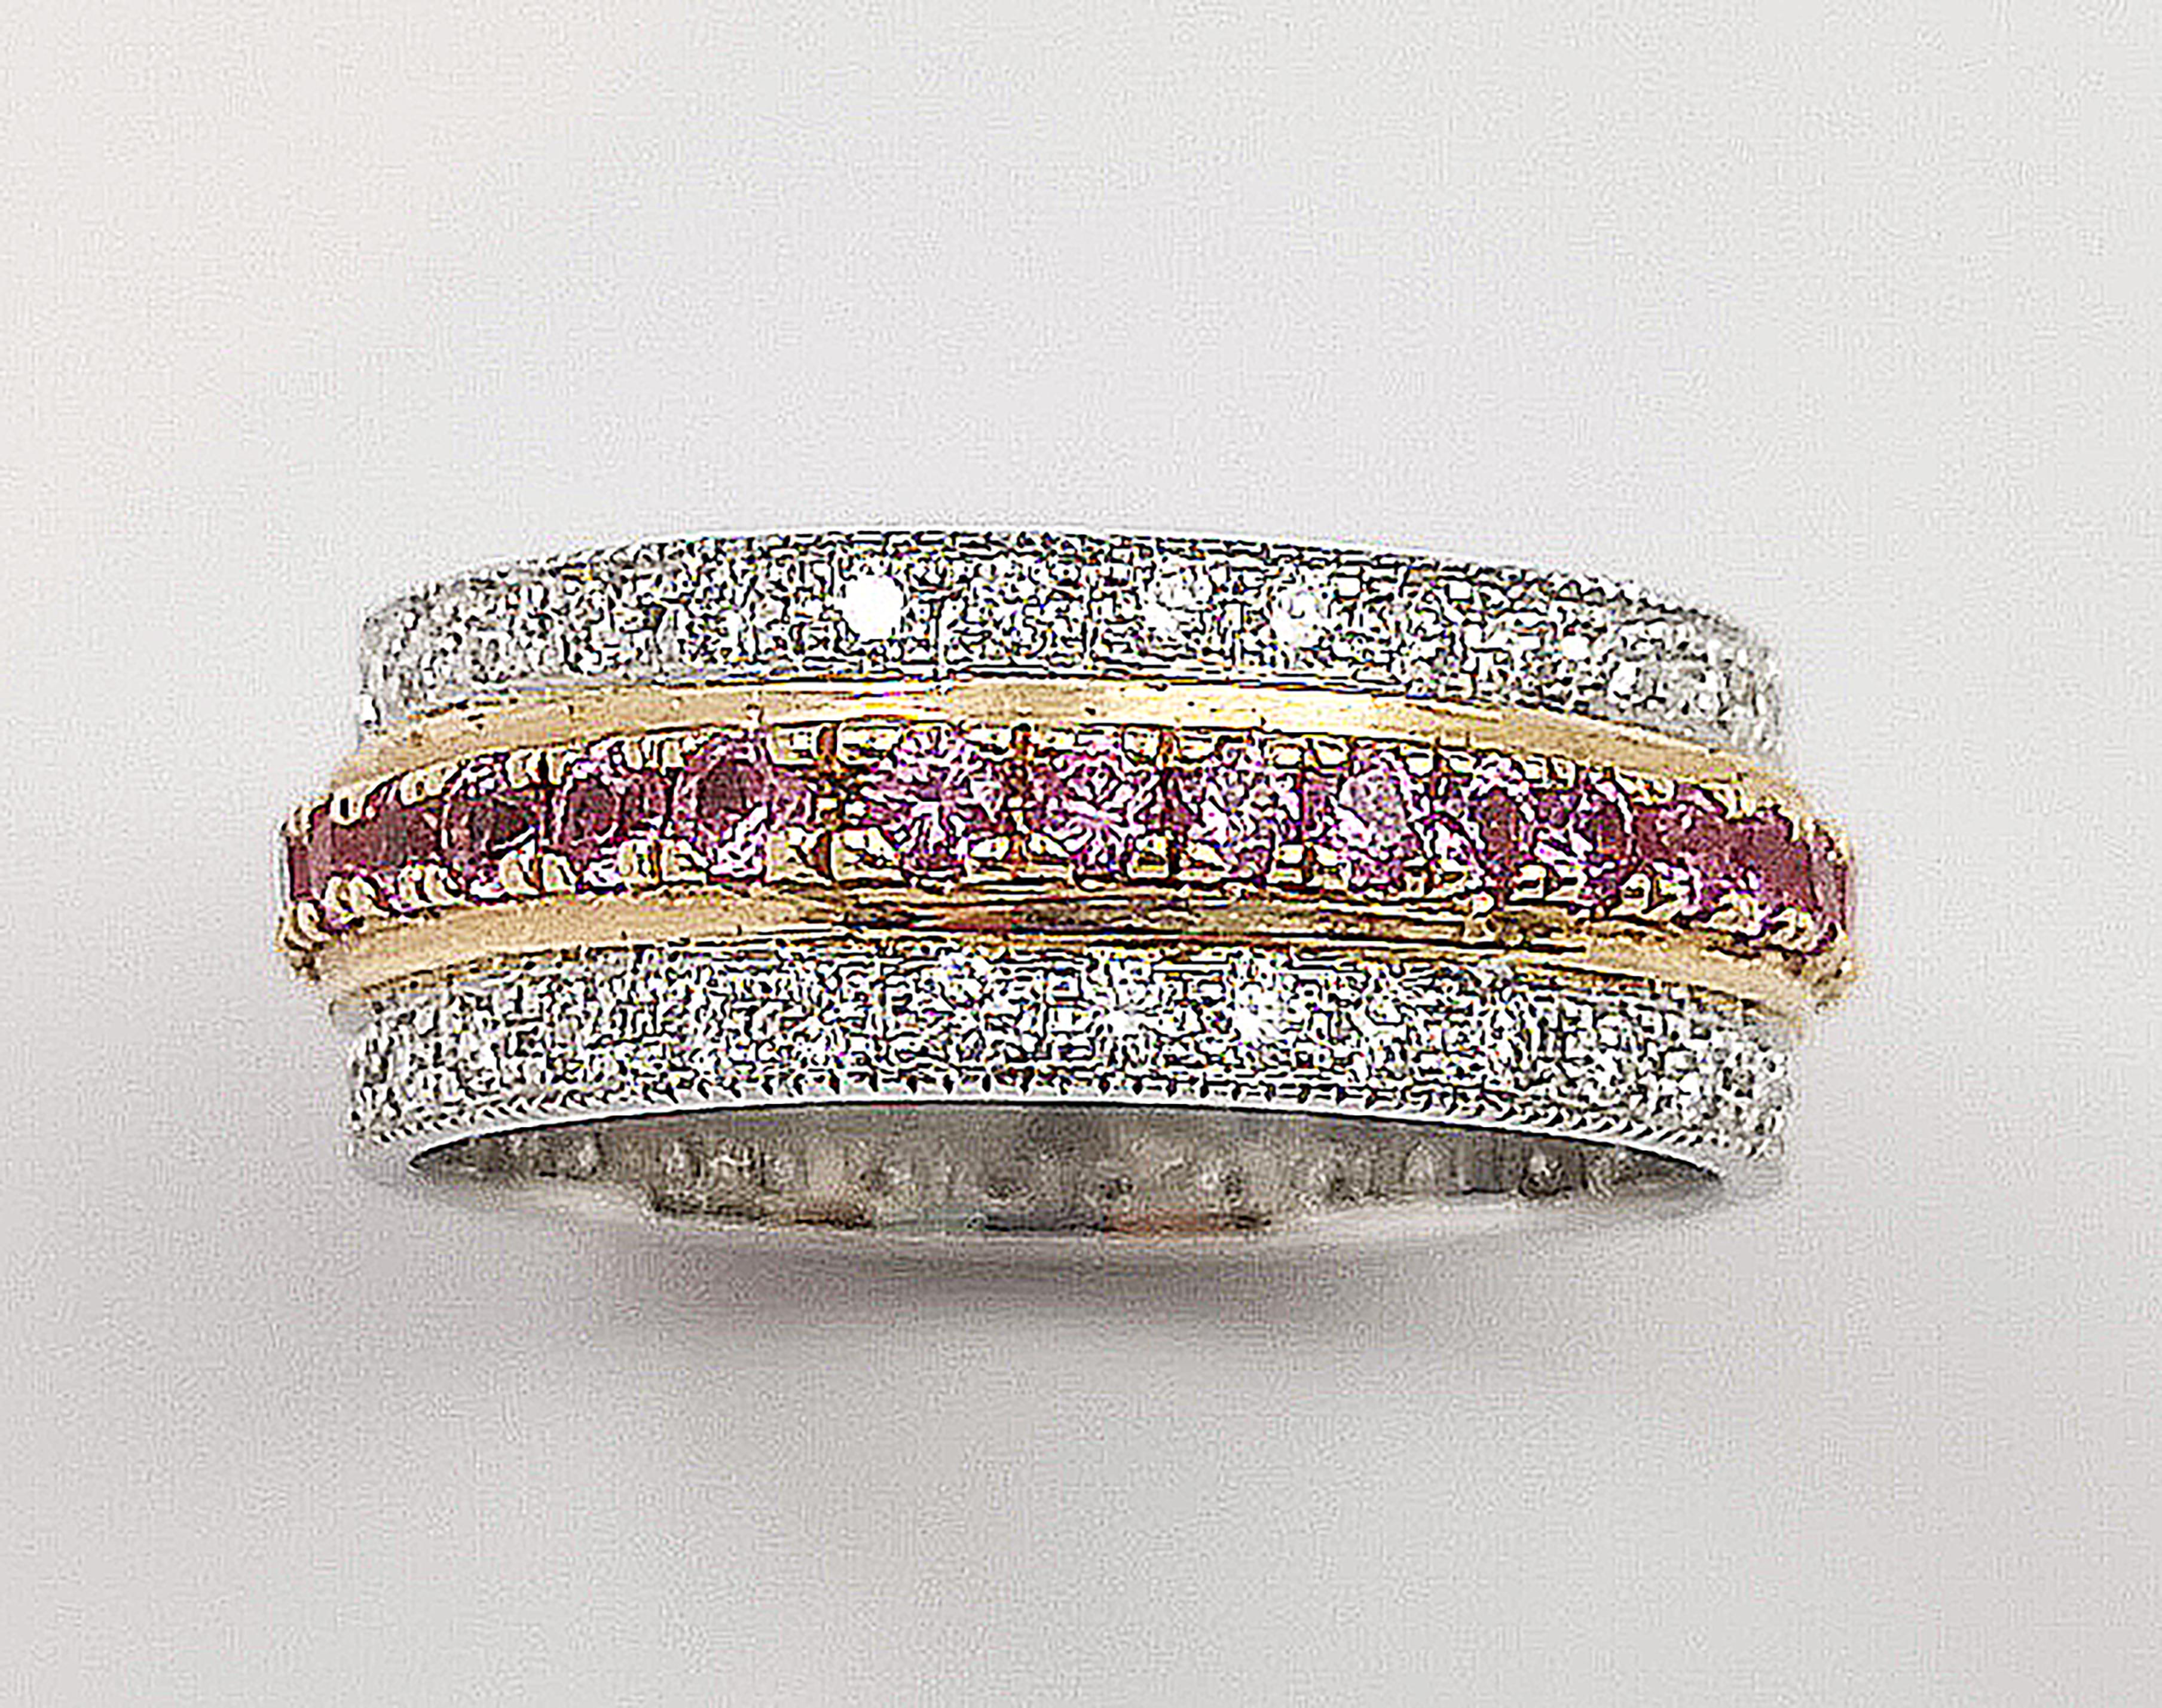 Pink Sapphire 1.04 carats with Diamond 0.64 carat Ring set in 18 Karat White Gold Settings

Diameter:  2.2 cm 
Length: 0.7 cm
Ring Size: 57
Total Weight: 6.47 grams

